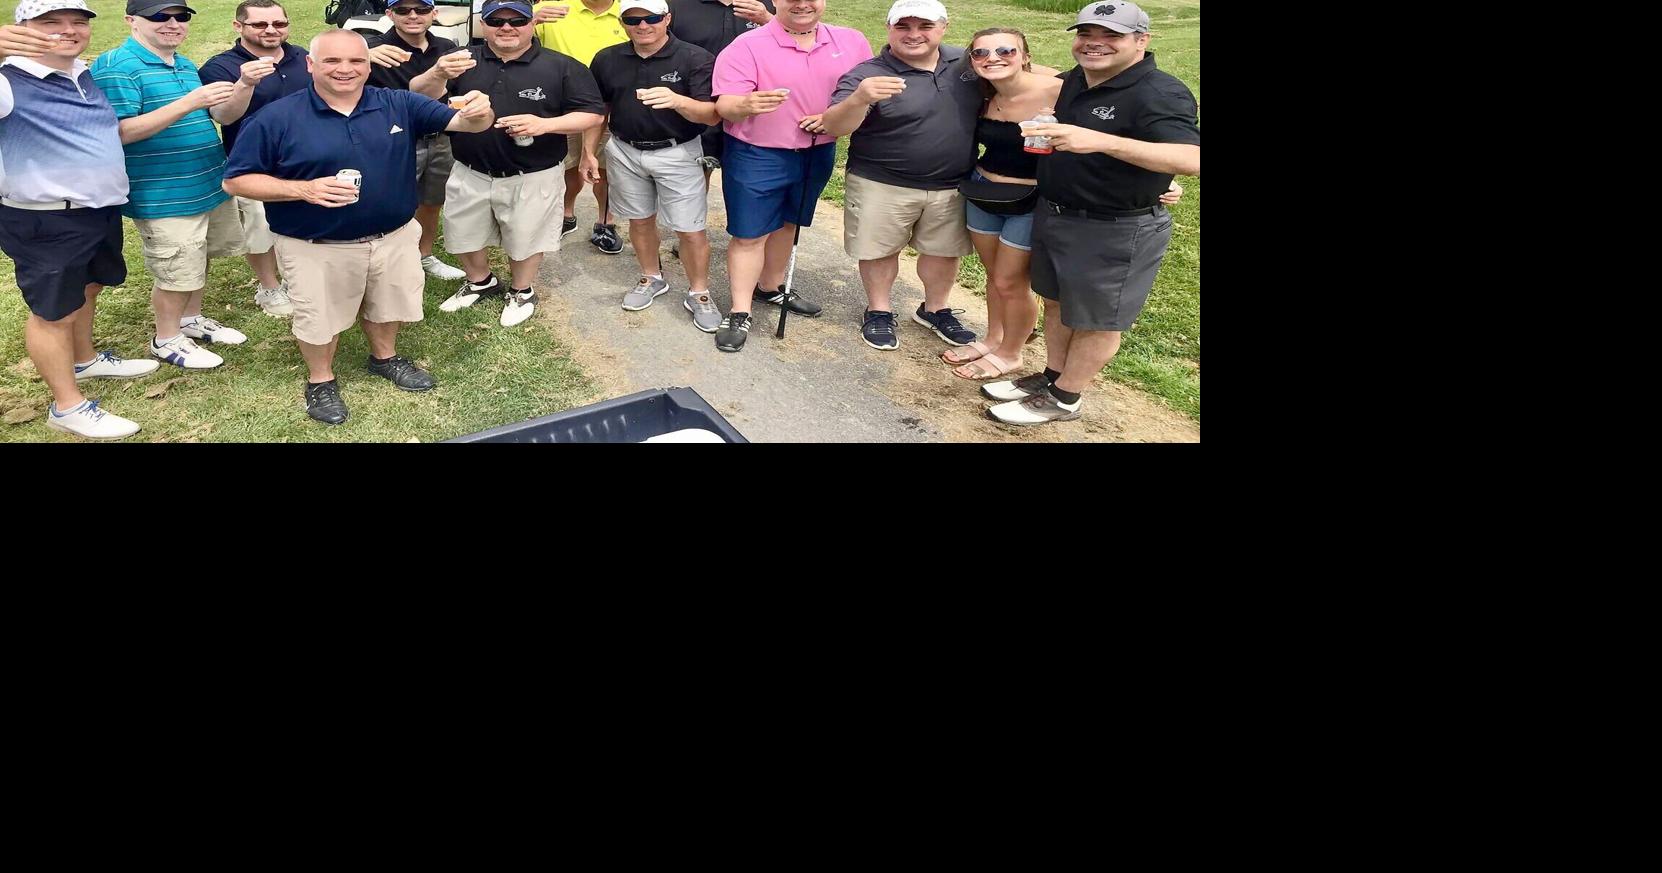 Thomas Porteus Jr. Memorial Golf tourney supporting local children with diabetes